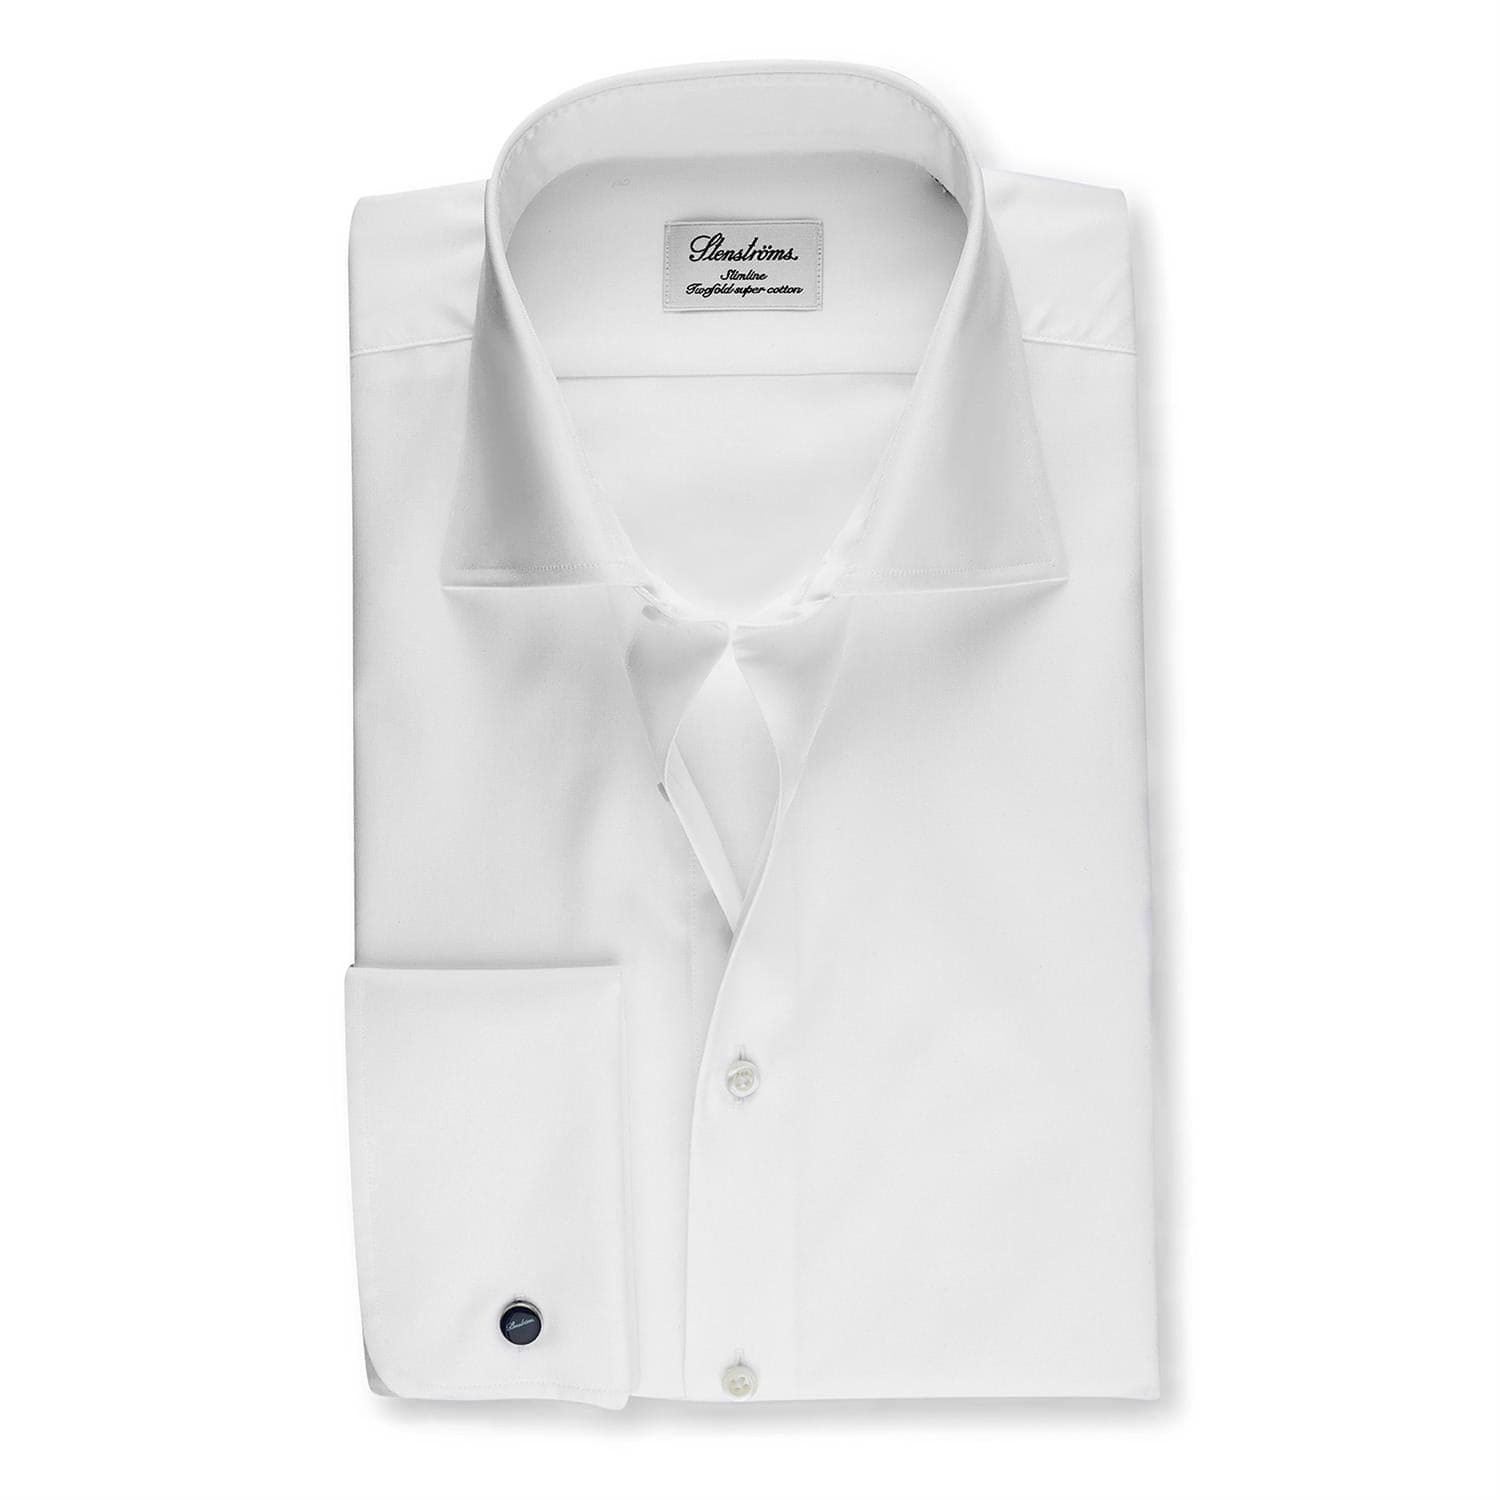 White Slimline Shirt With French Cuffs